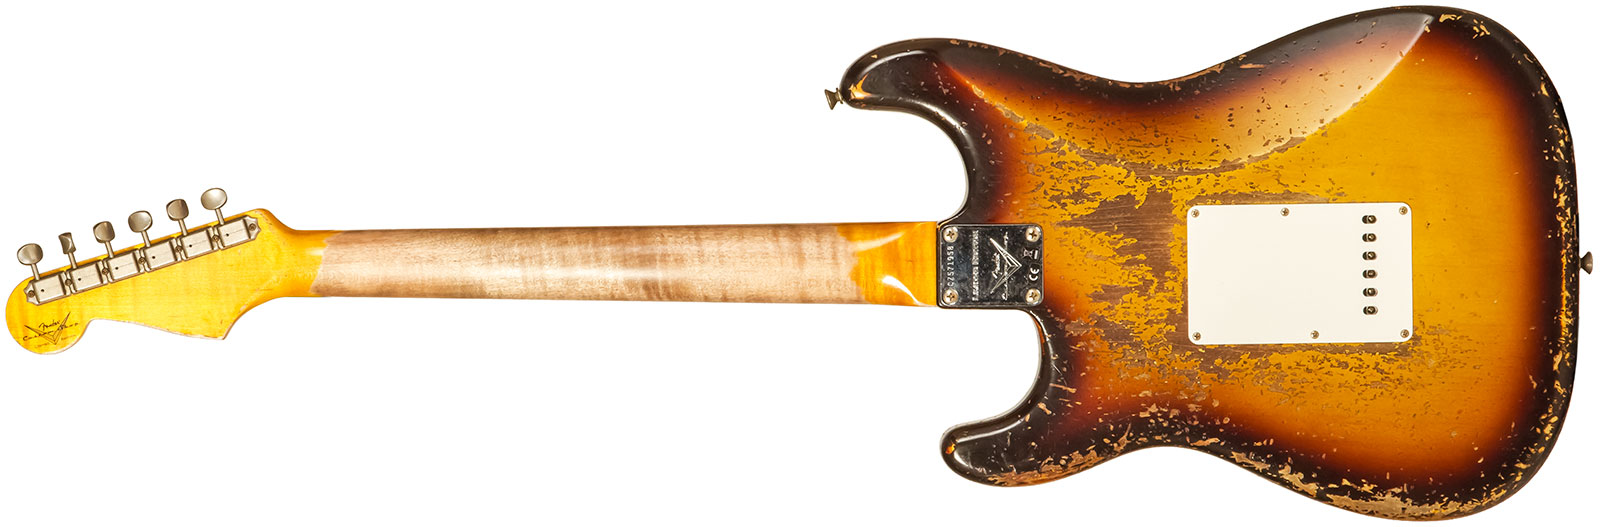 Fender Custom Shop Strat 1959 3s Trem Rw #cz571958 - Super Heavy Relic Aged Chocolate 3-color Sunburst - Str shape electric guitar - Variation 1